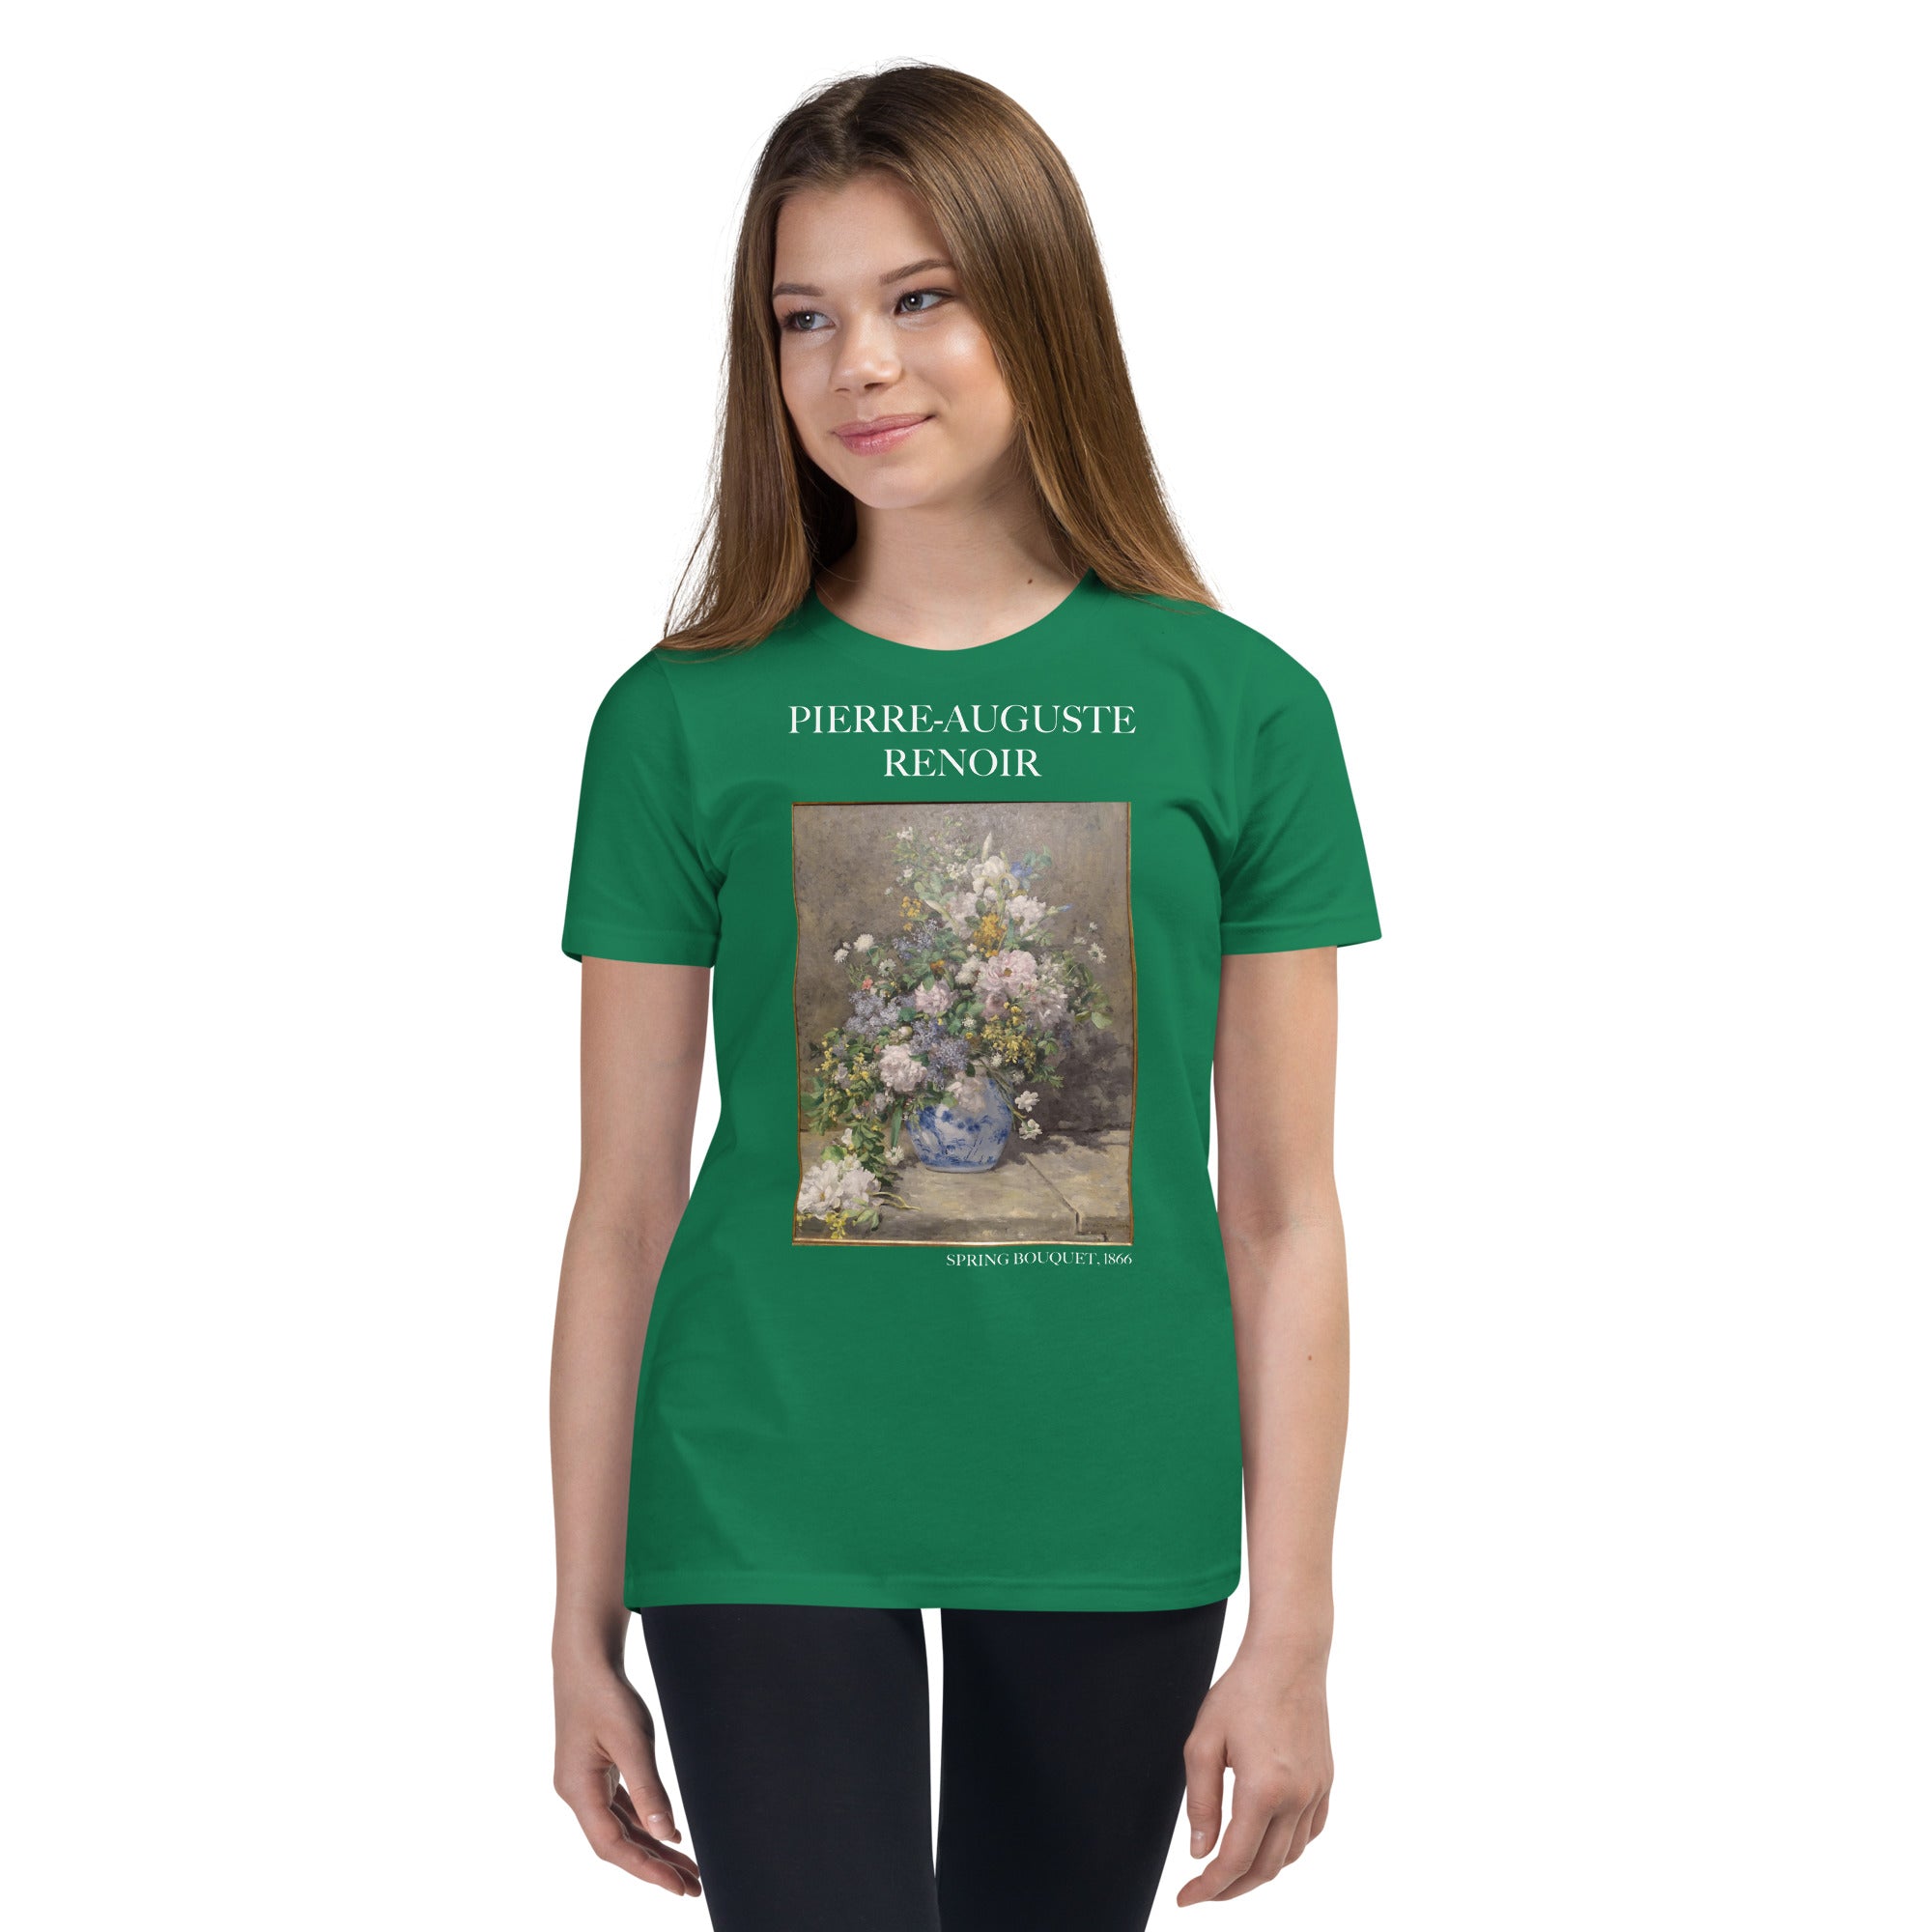 Pierre-Auguste Renoir 'Spring Bouquet' Famous Painting Short Sleeve T-Shirt | Premium Youth Art Tee